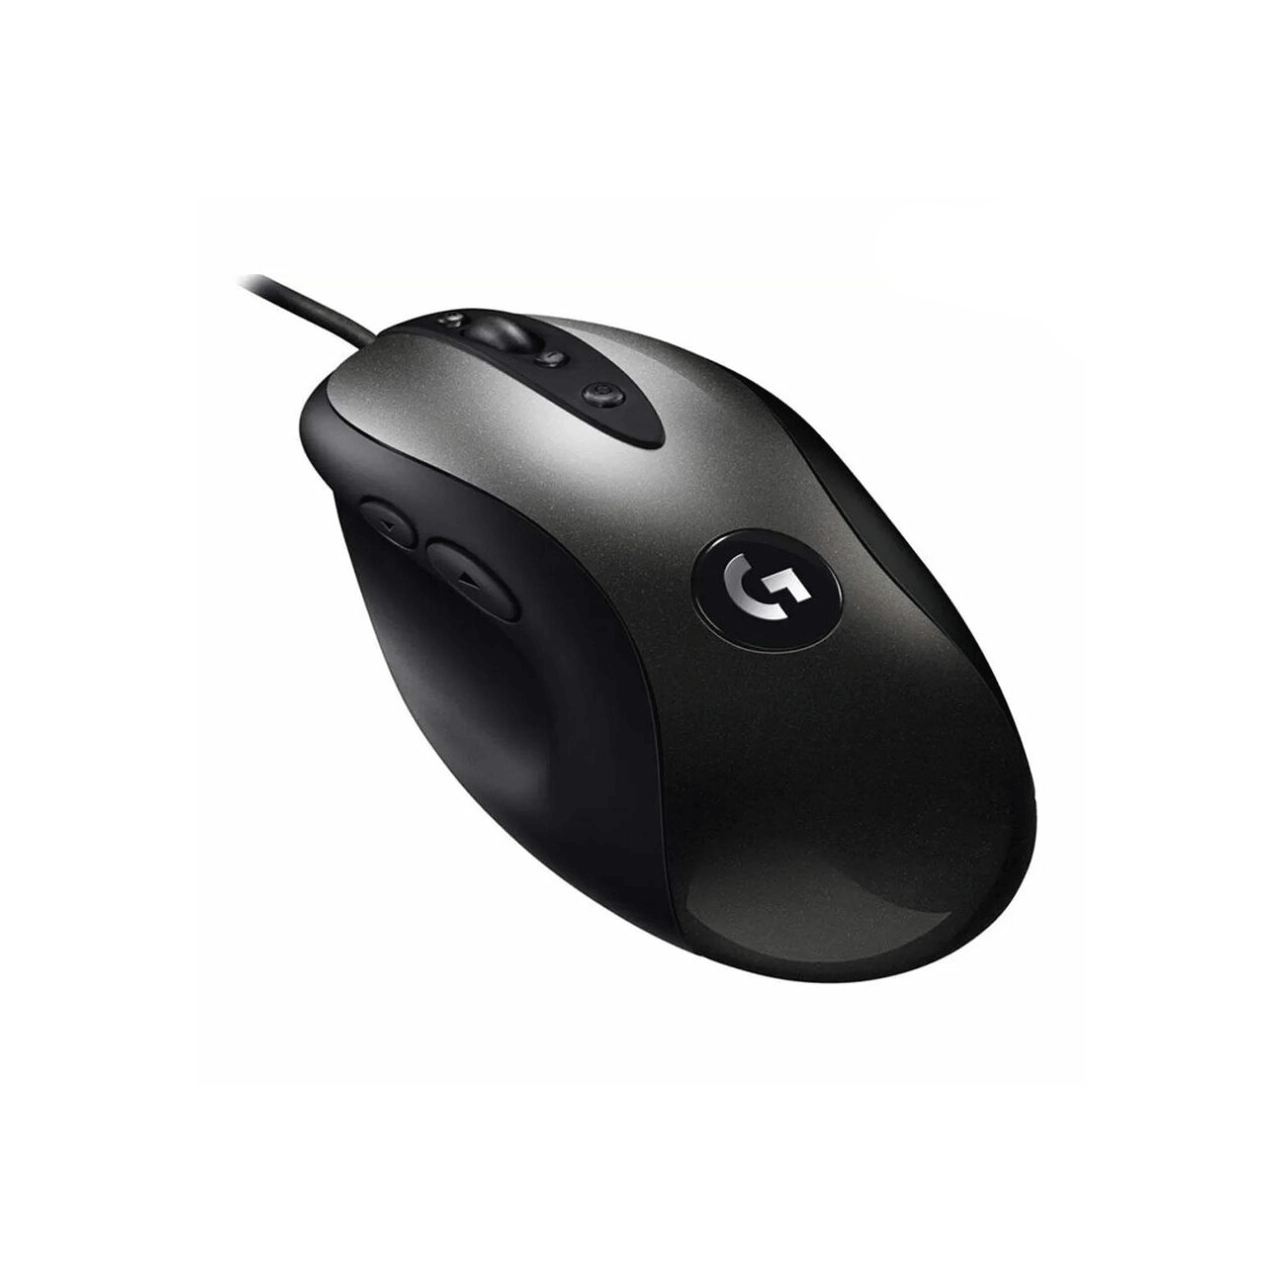 Logitech--MX518-HERO---Gaming-Mouse